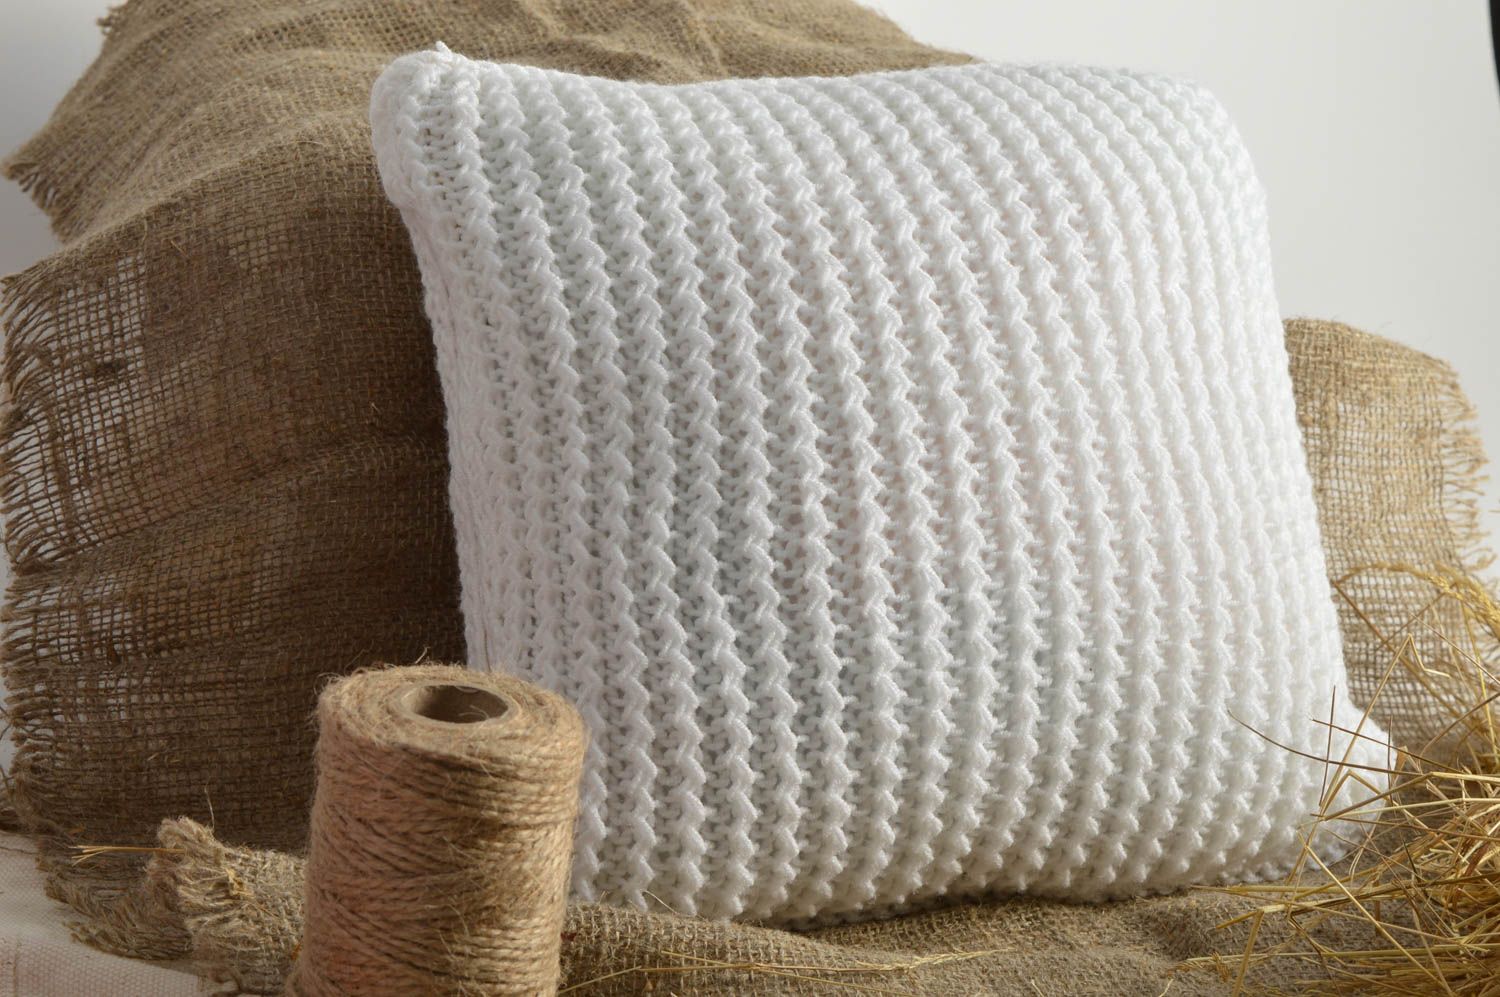 Small stylish beautiful handmade white knitted pillowcase designer accessory photo 1